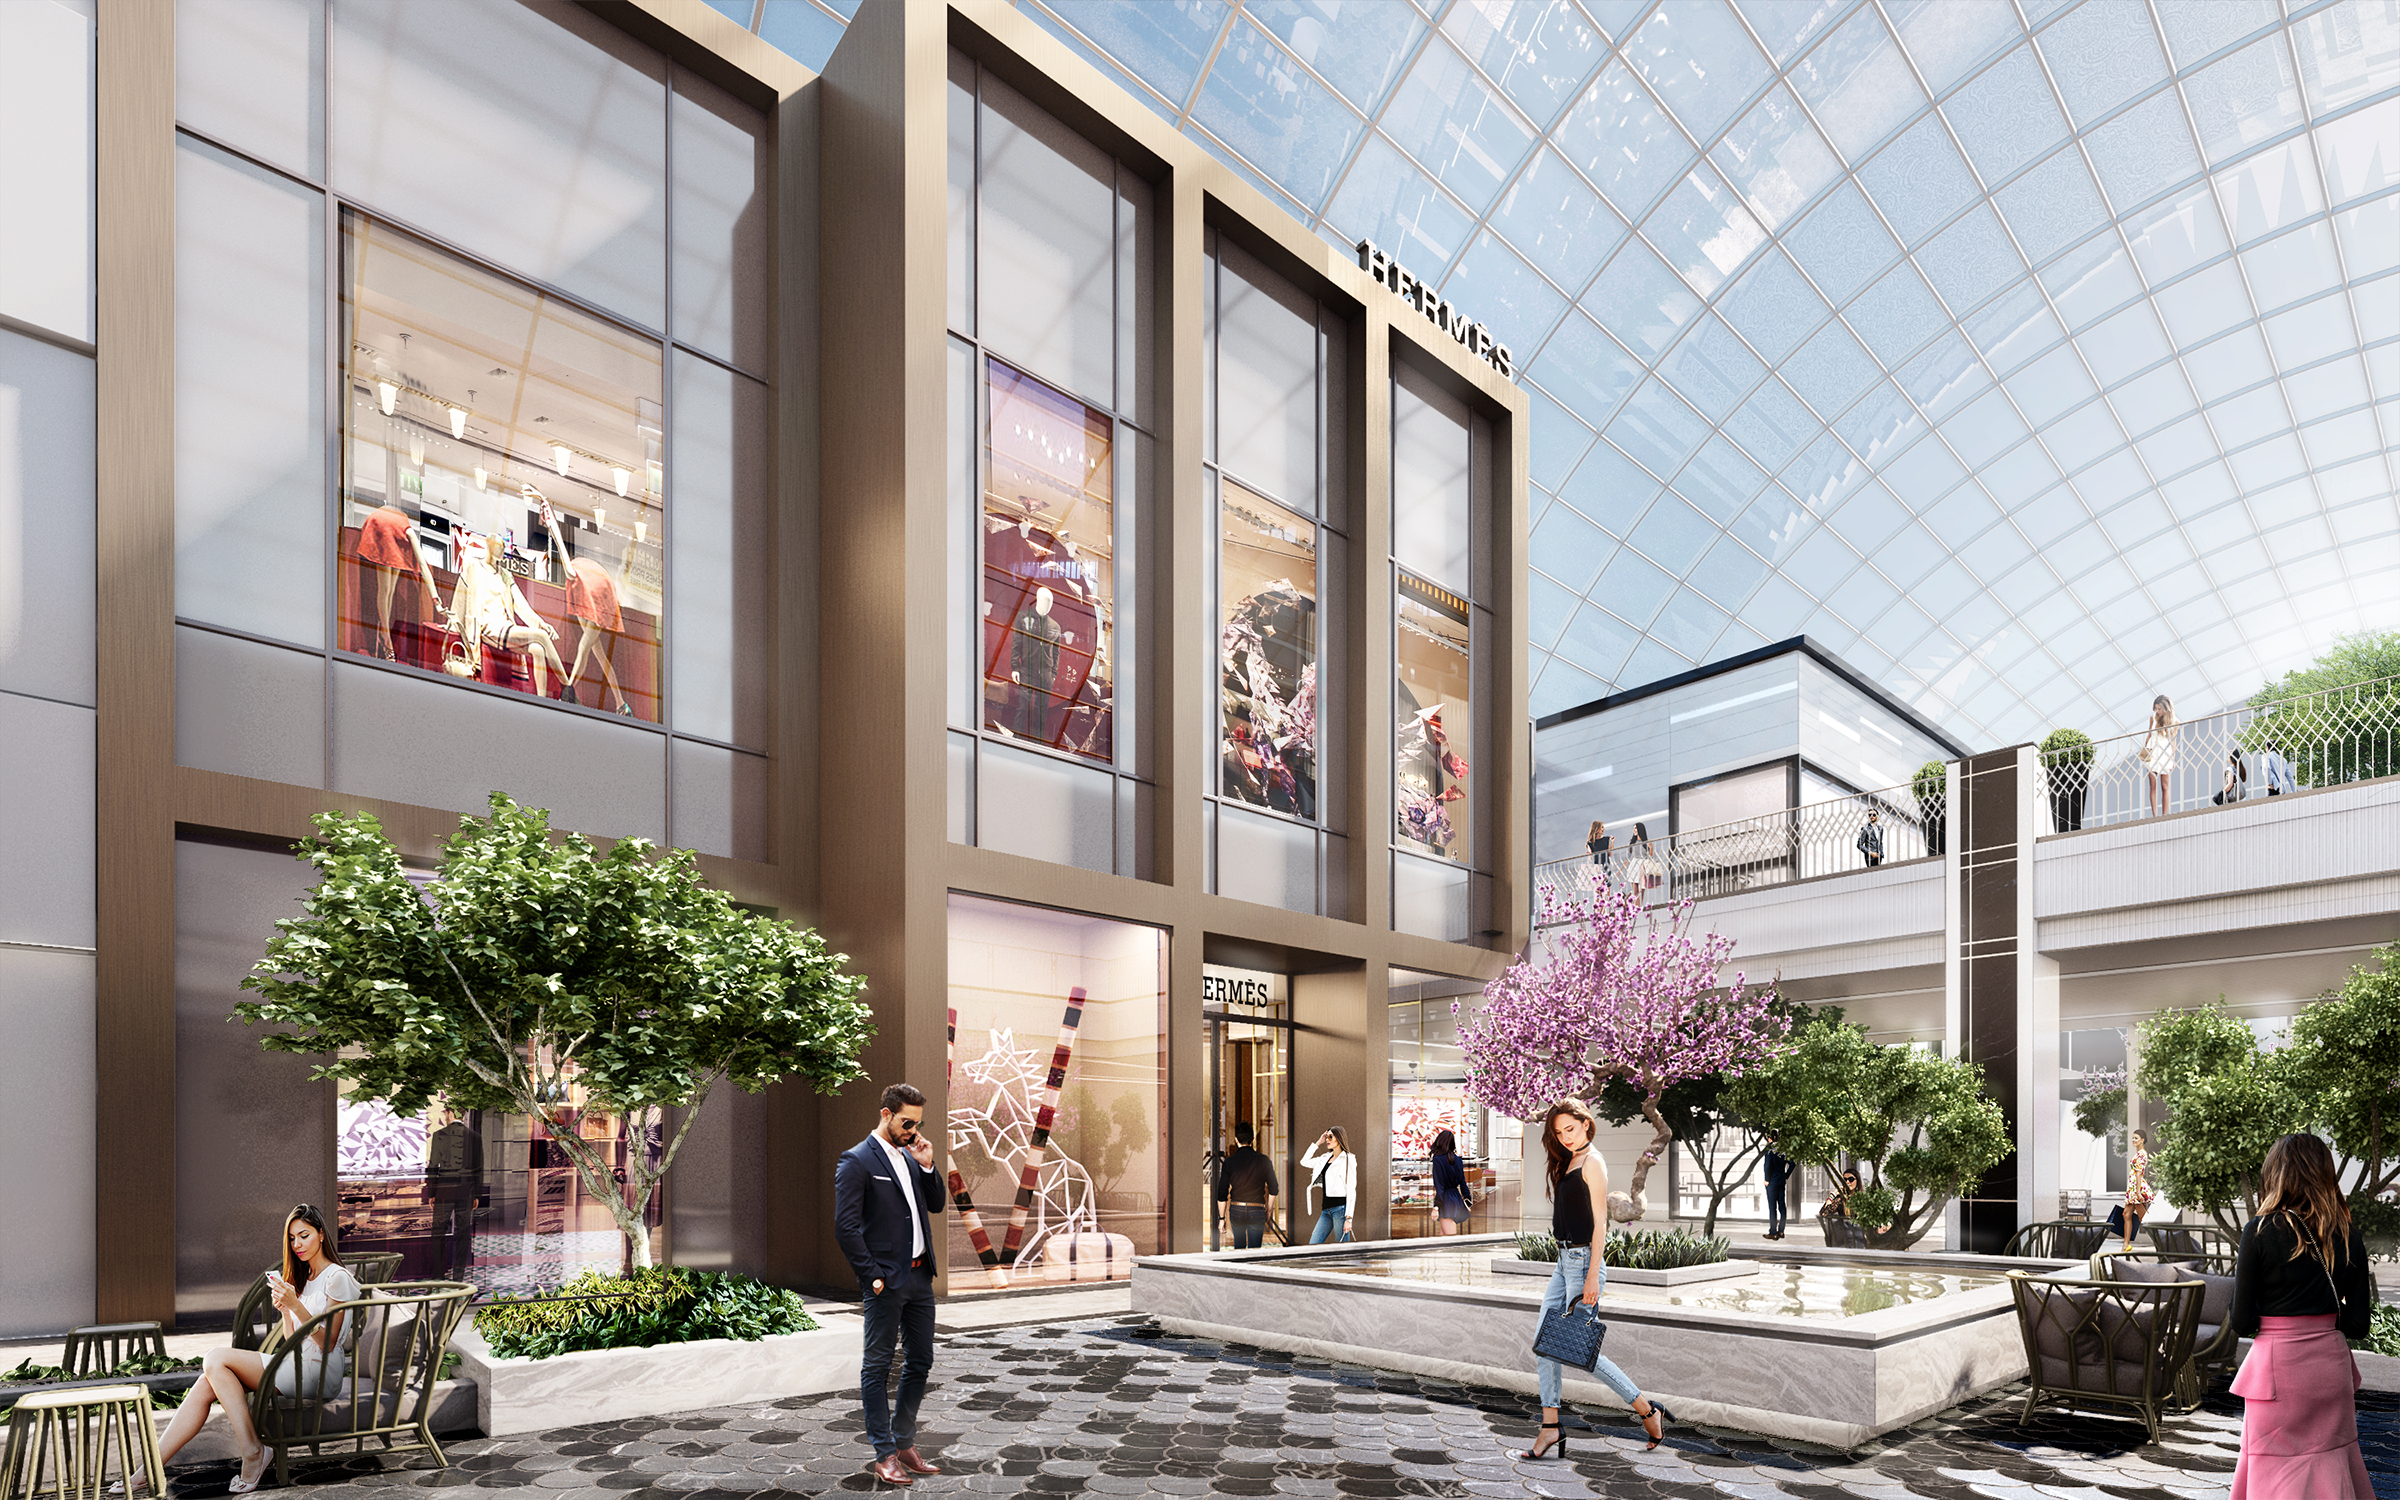 American Dream Mall Set to Open